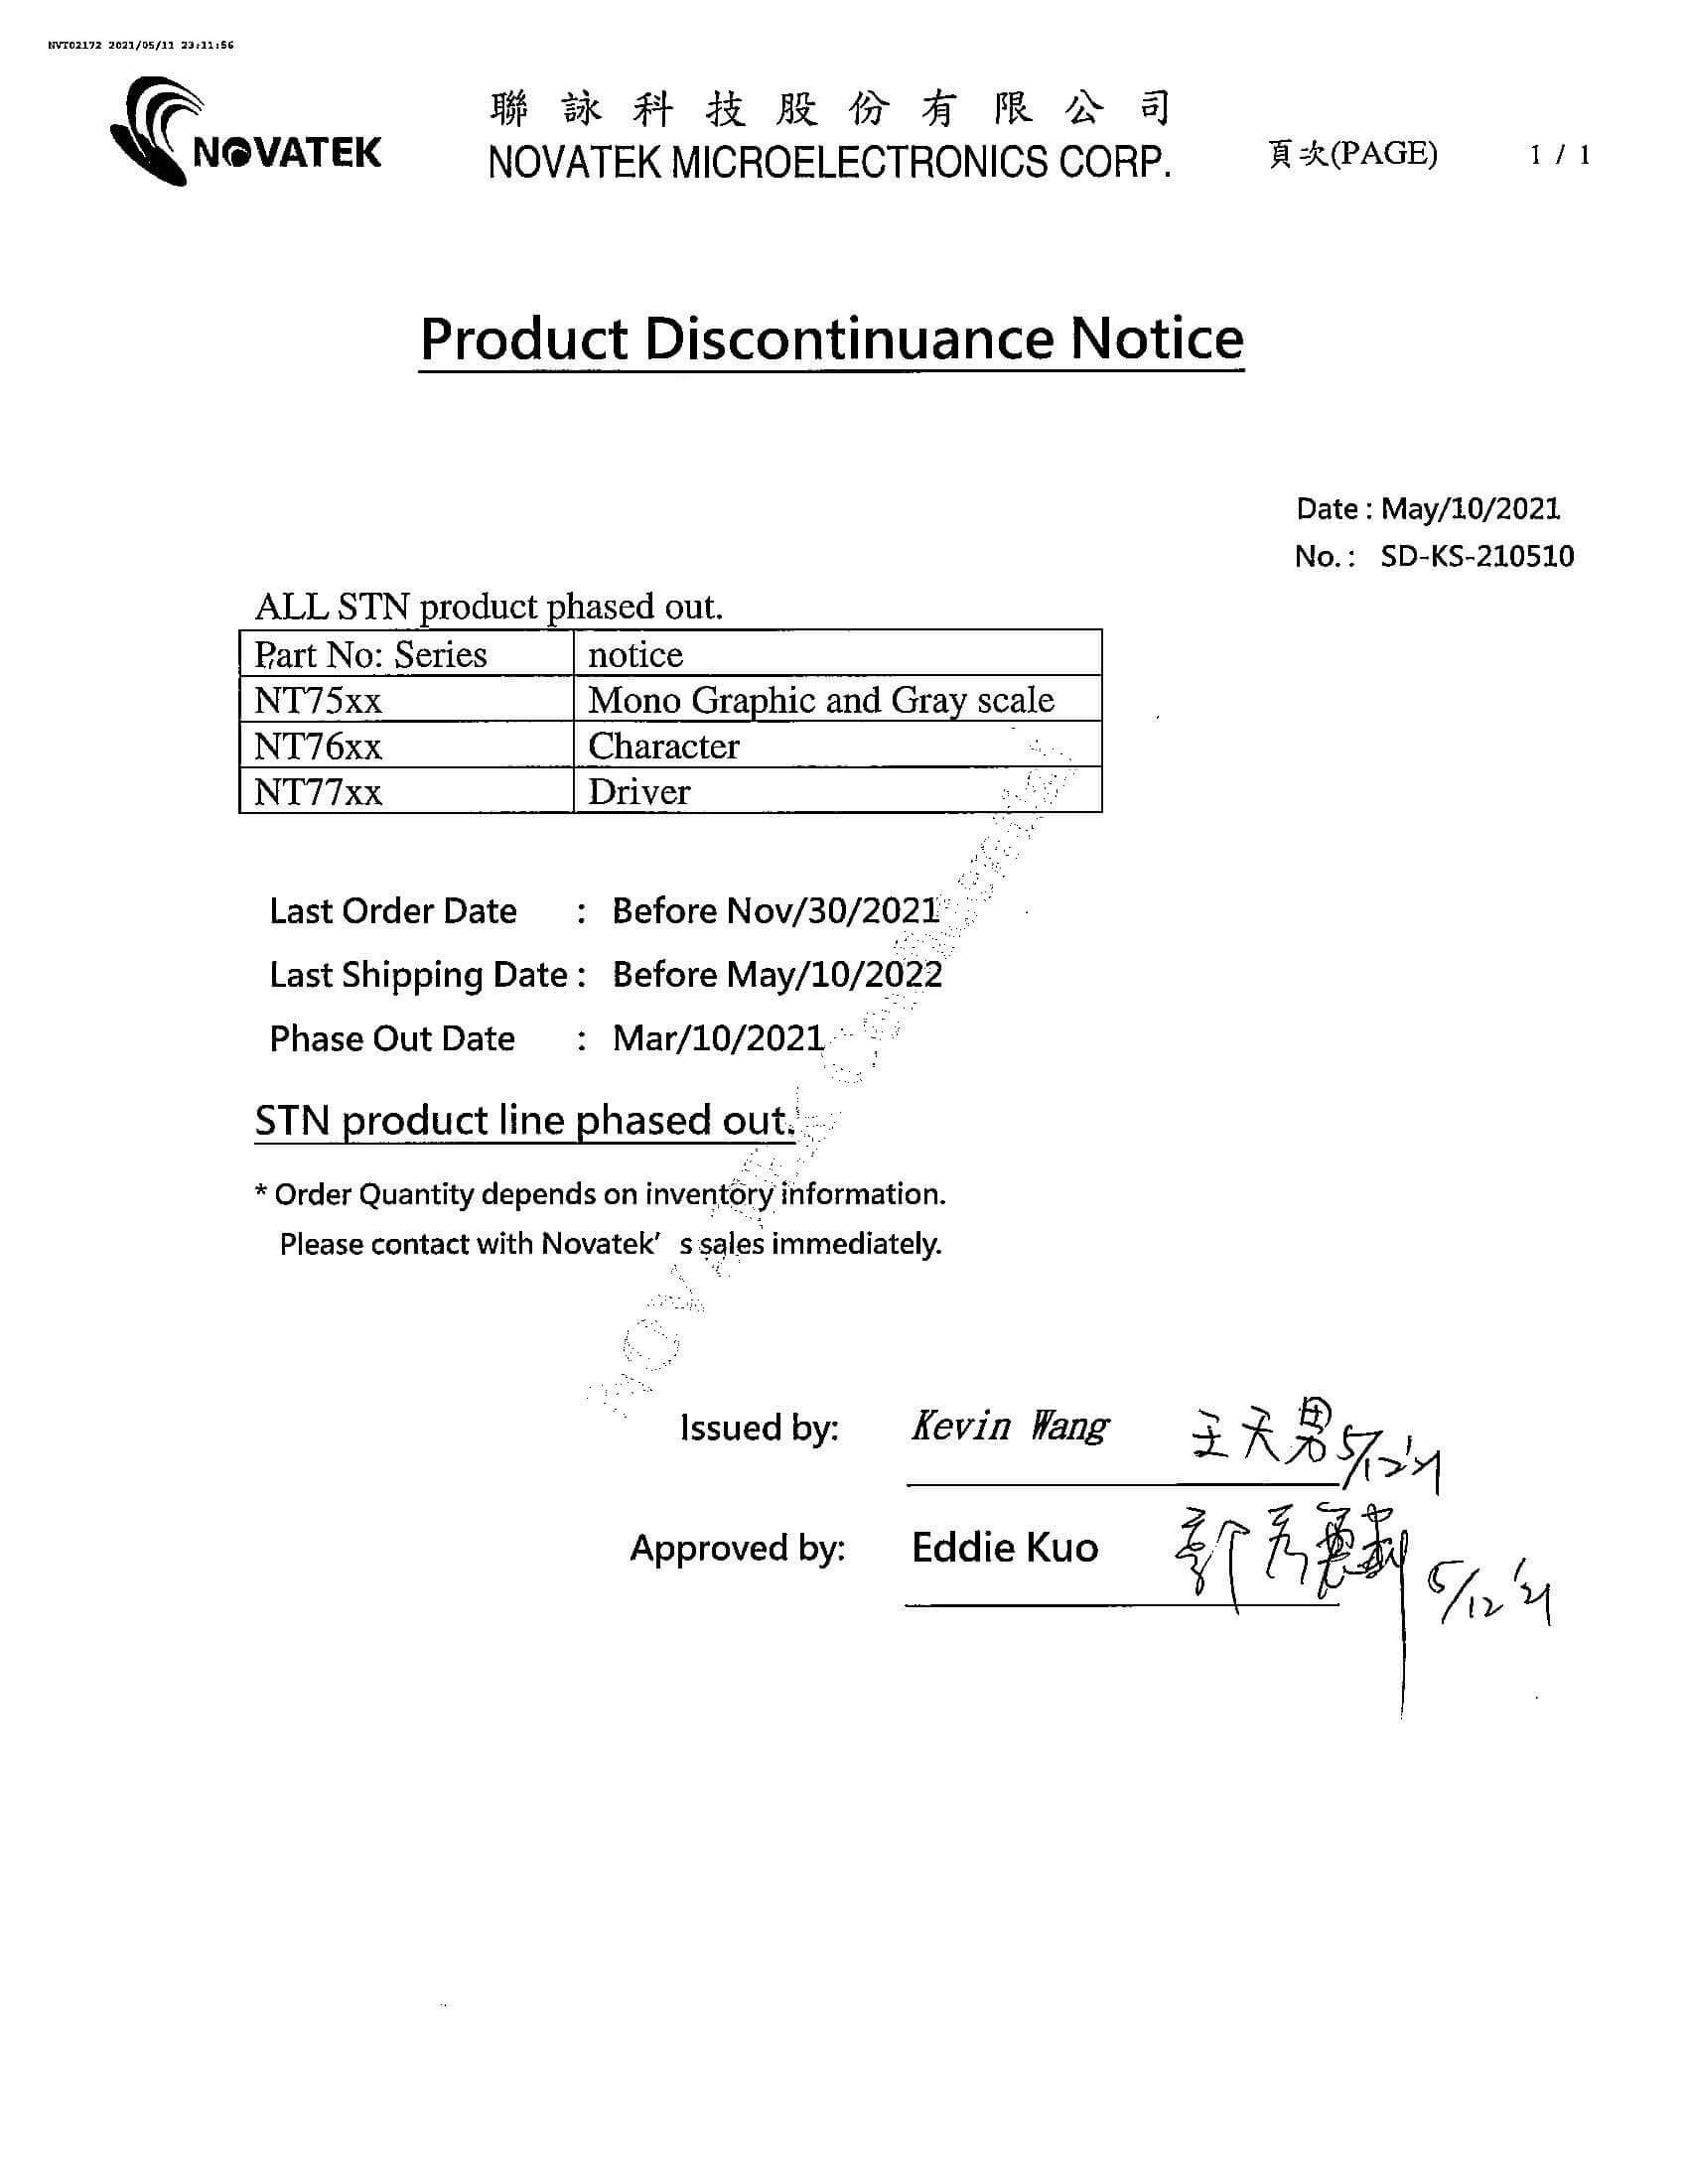 NOVATEK Product Discontinuance Notice